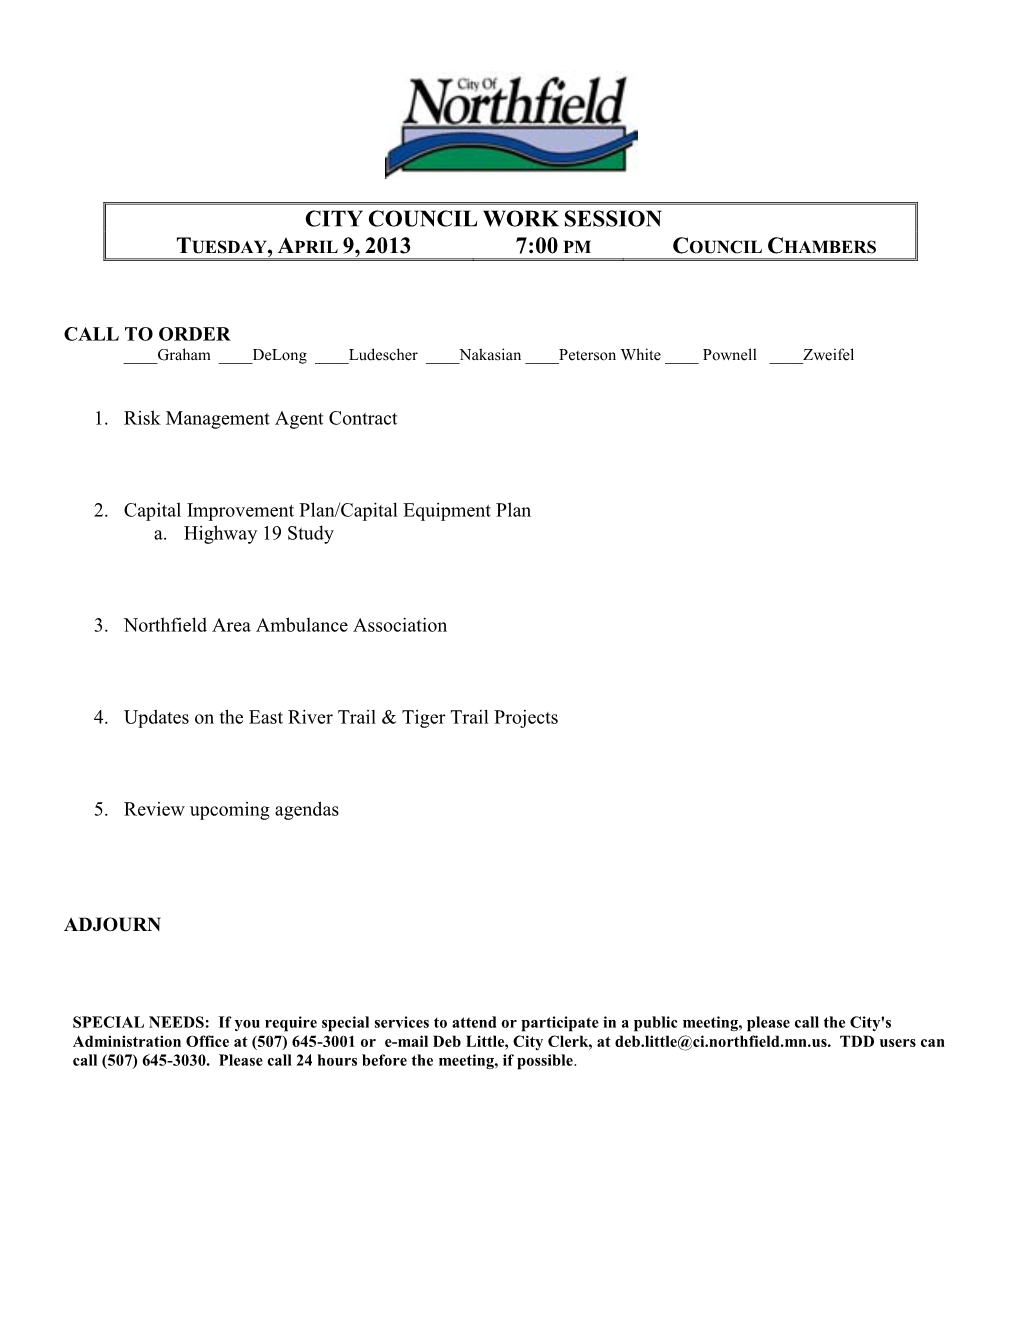 Northfield City Council Agenda